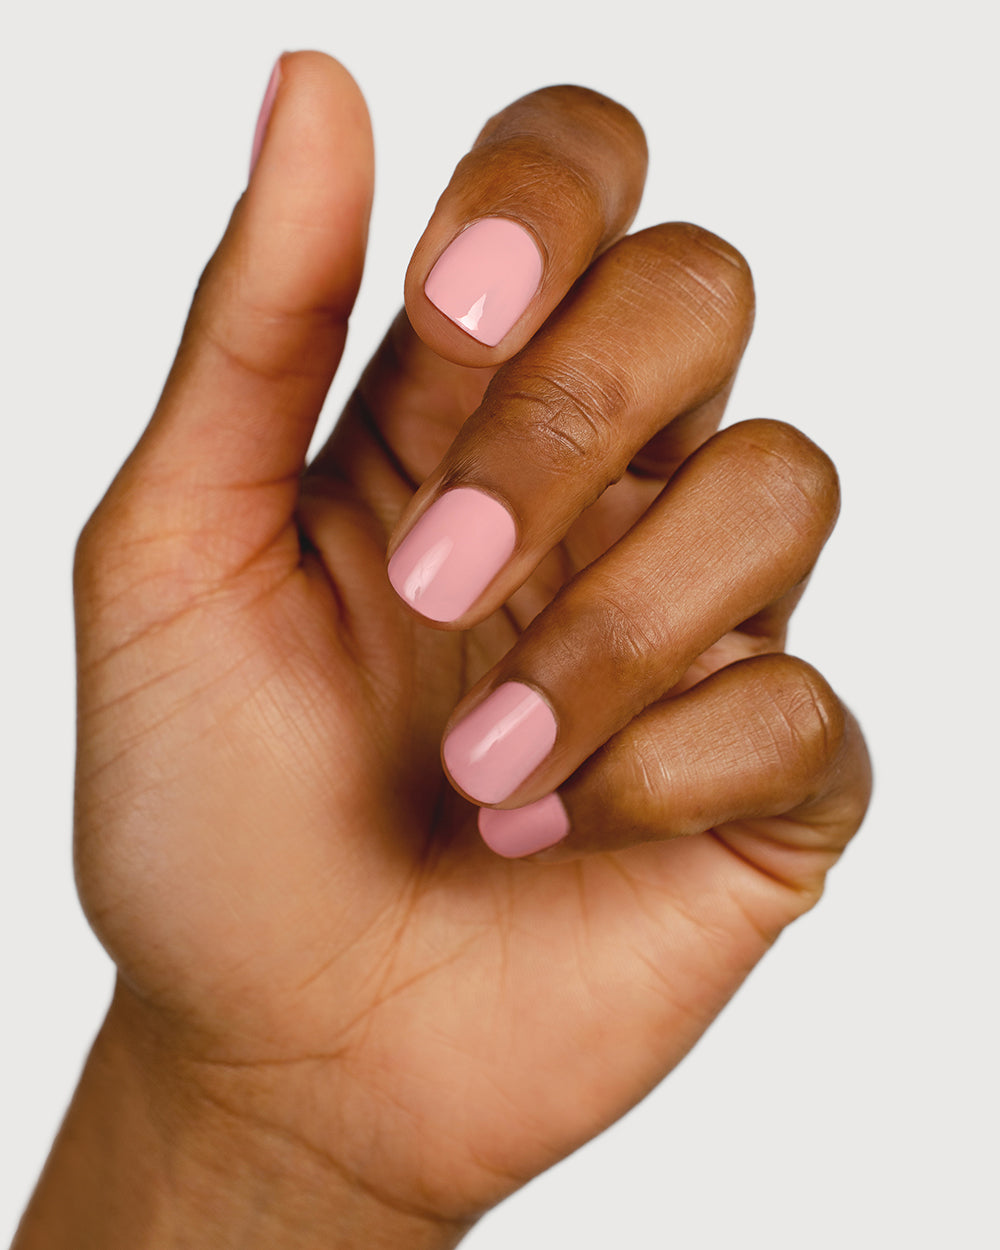 Cherry blossom pink nail polish hand swatch on medium skin tone